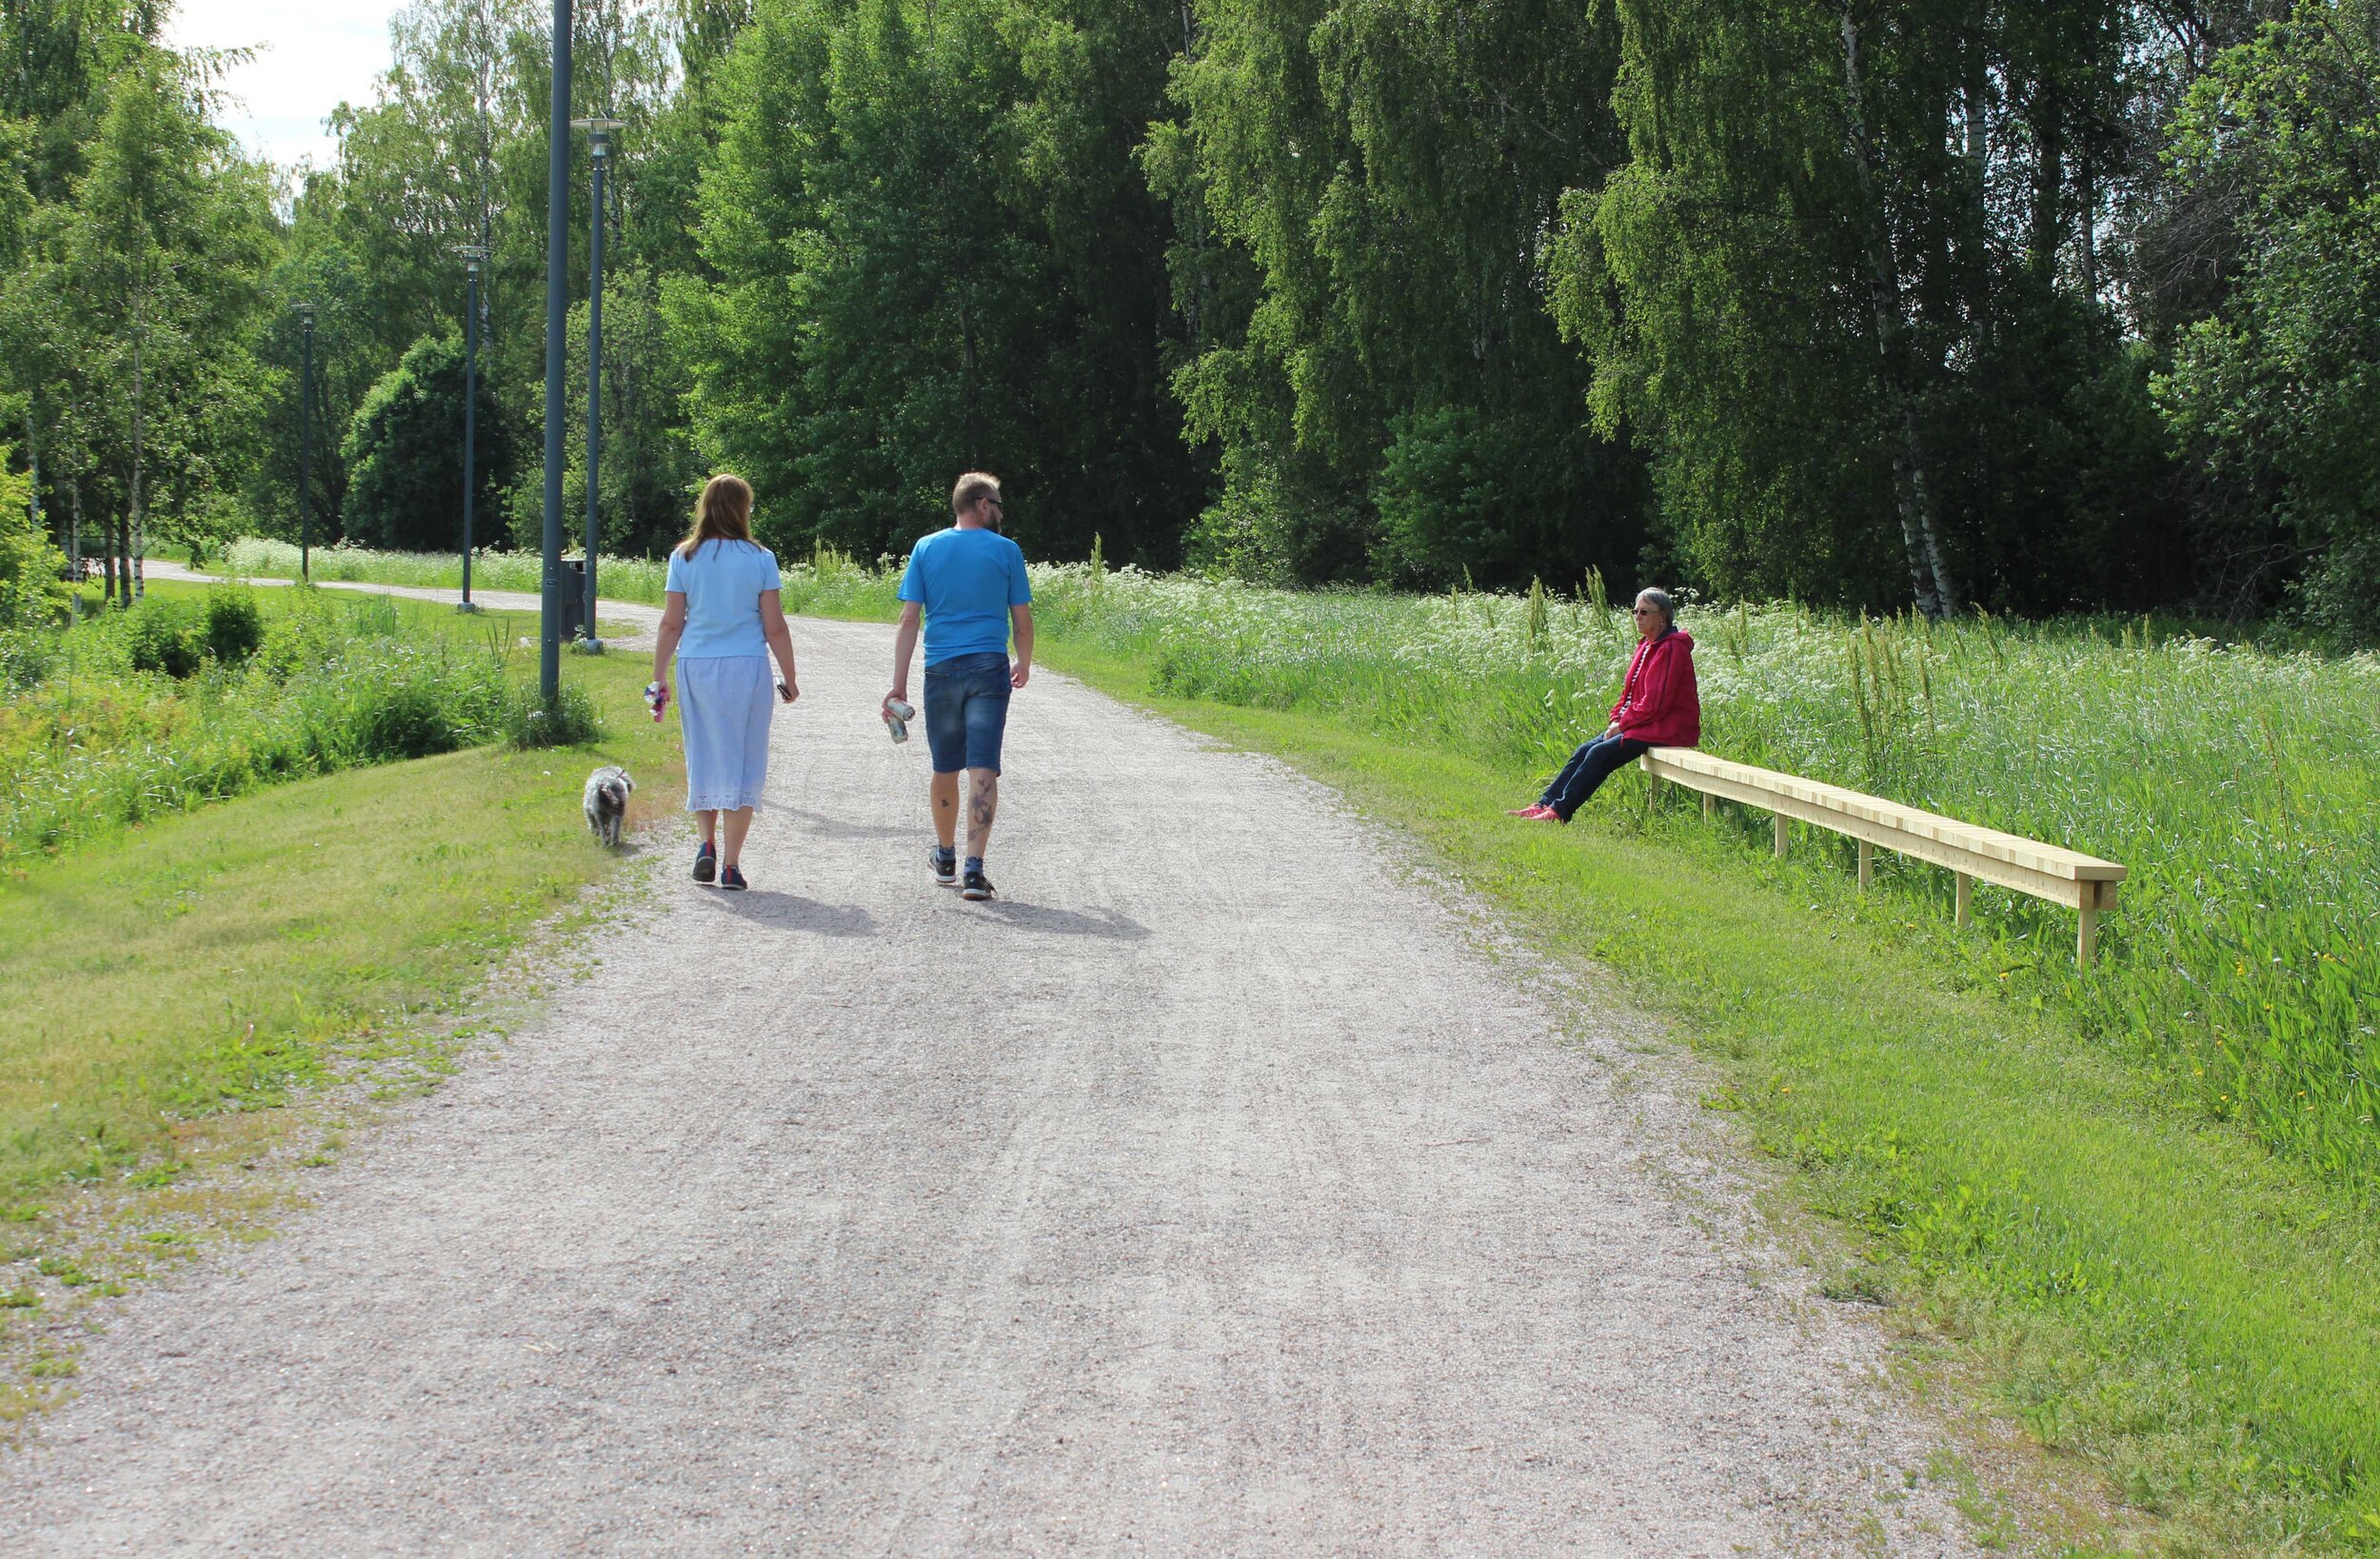 Walking Side by Side / Rinnakkain kävelijä